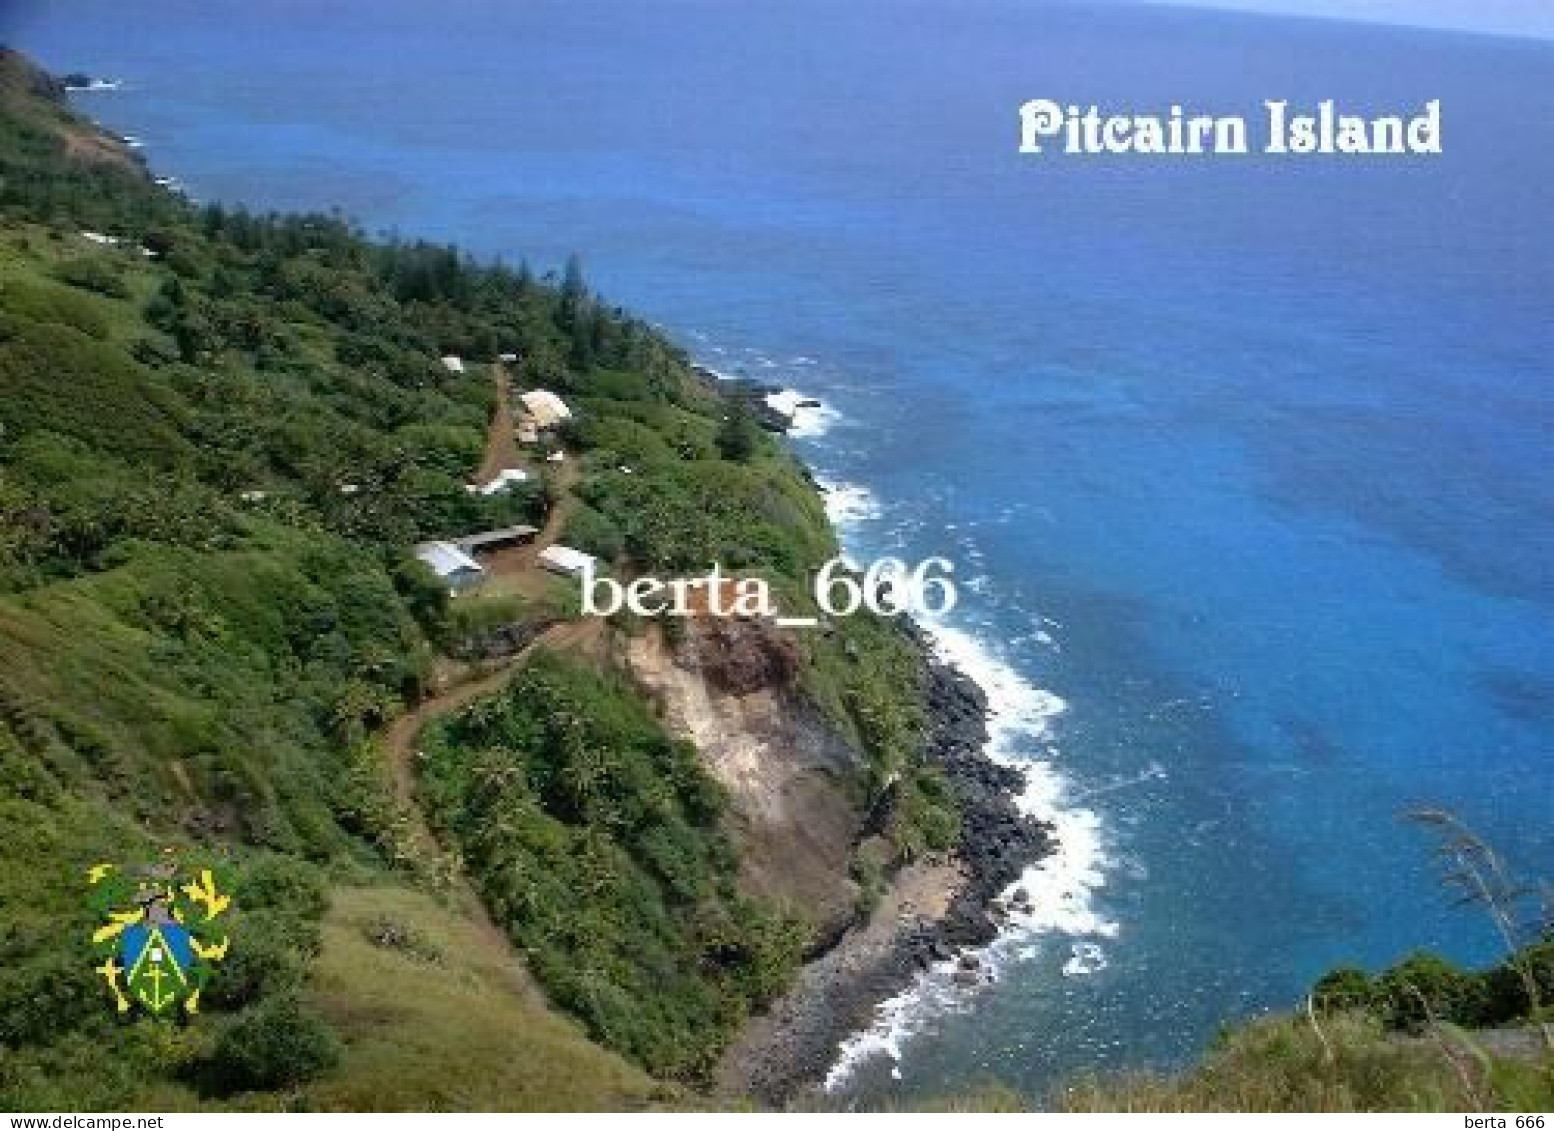 Pitcairn Island Overview New Postcard - Pitcairn